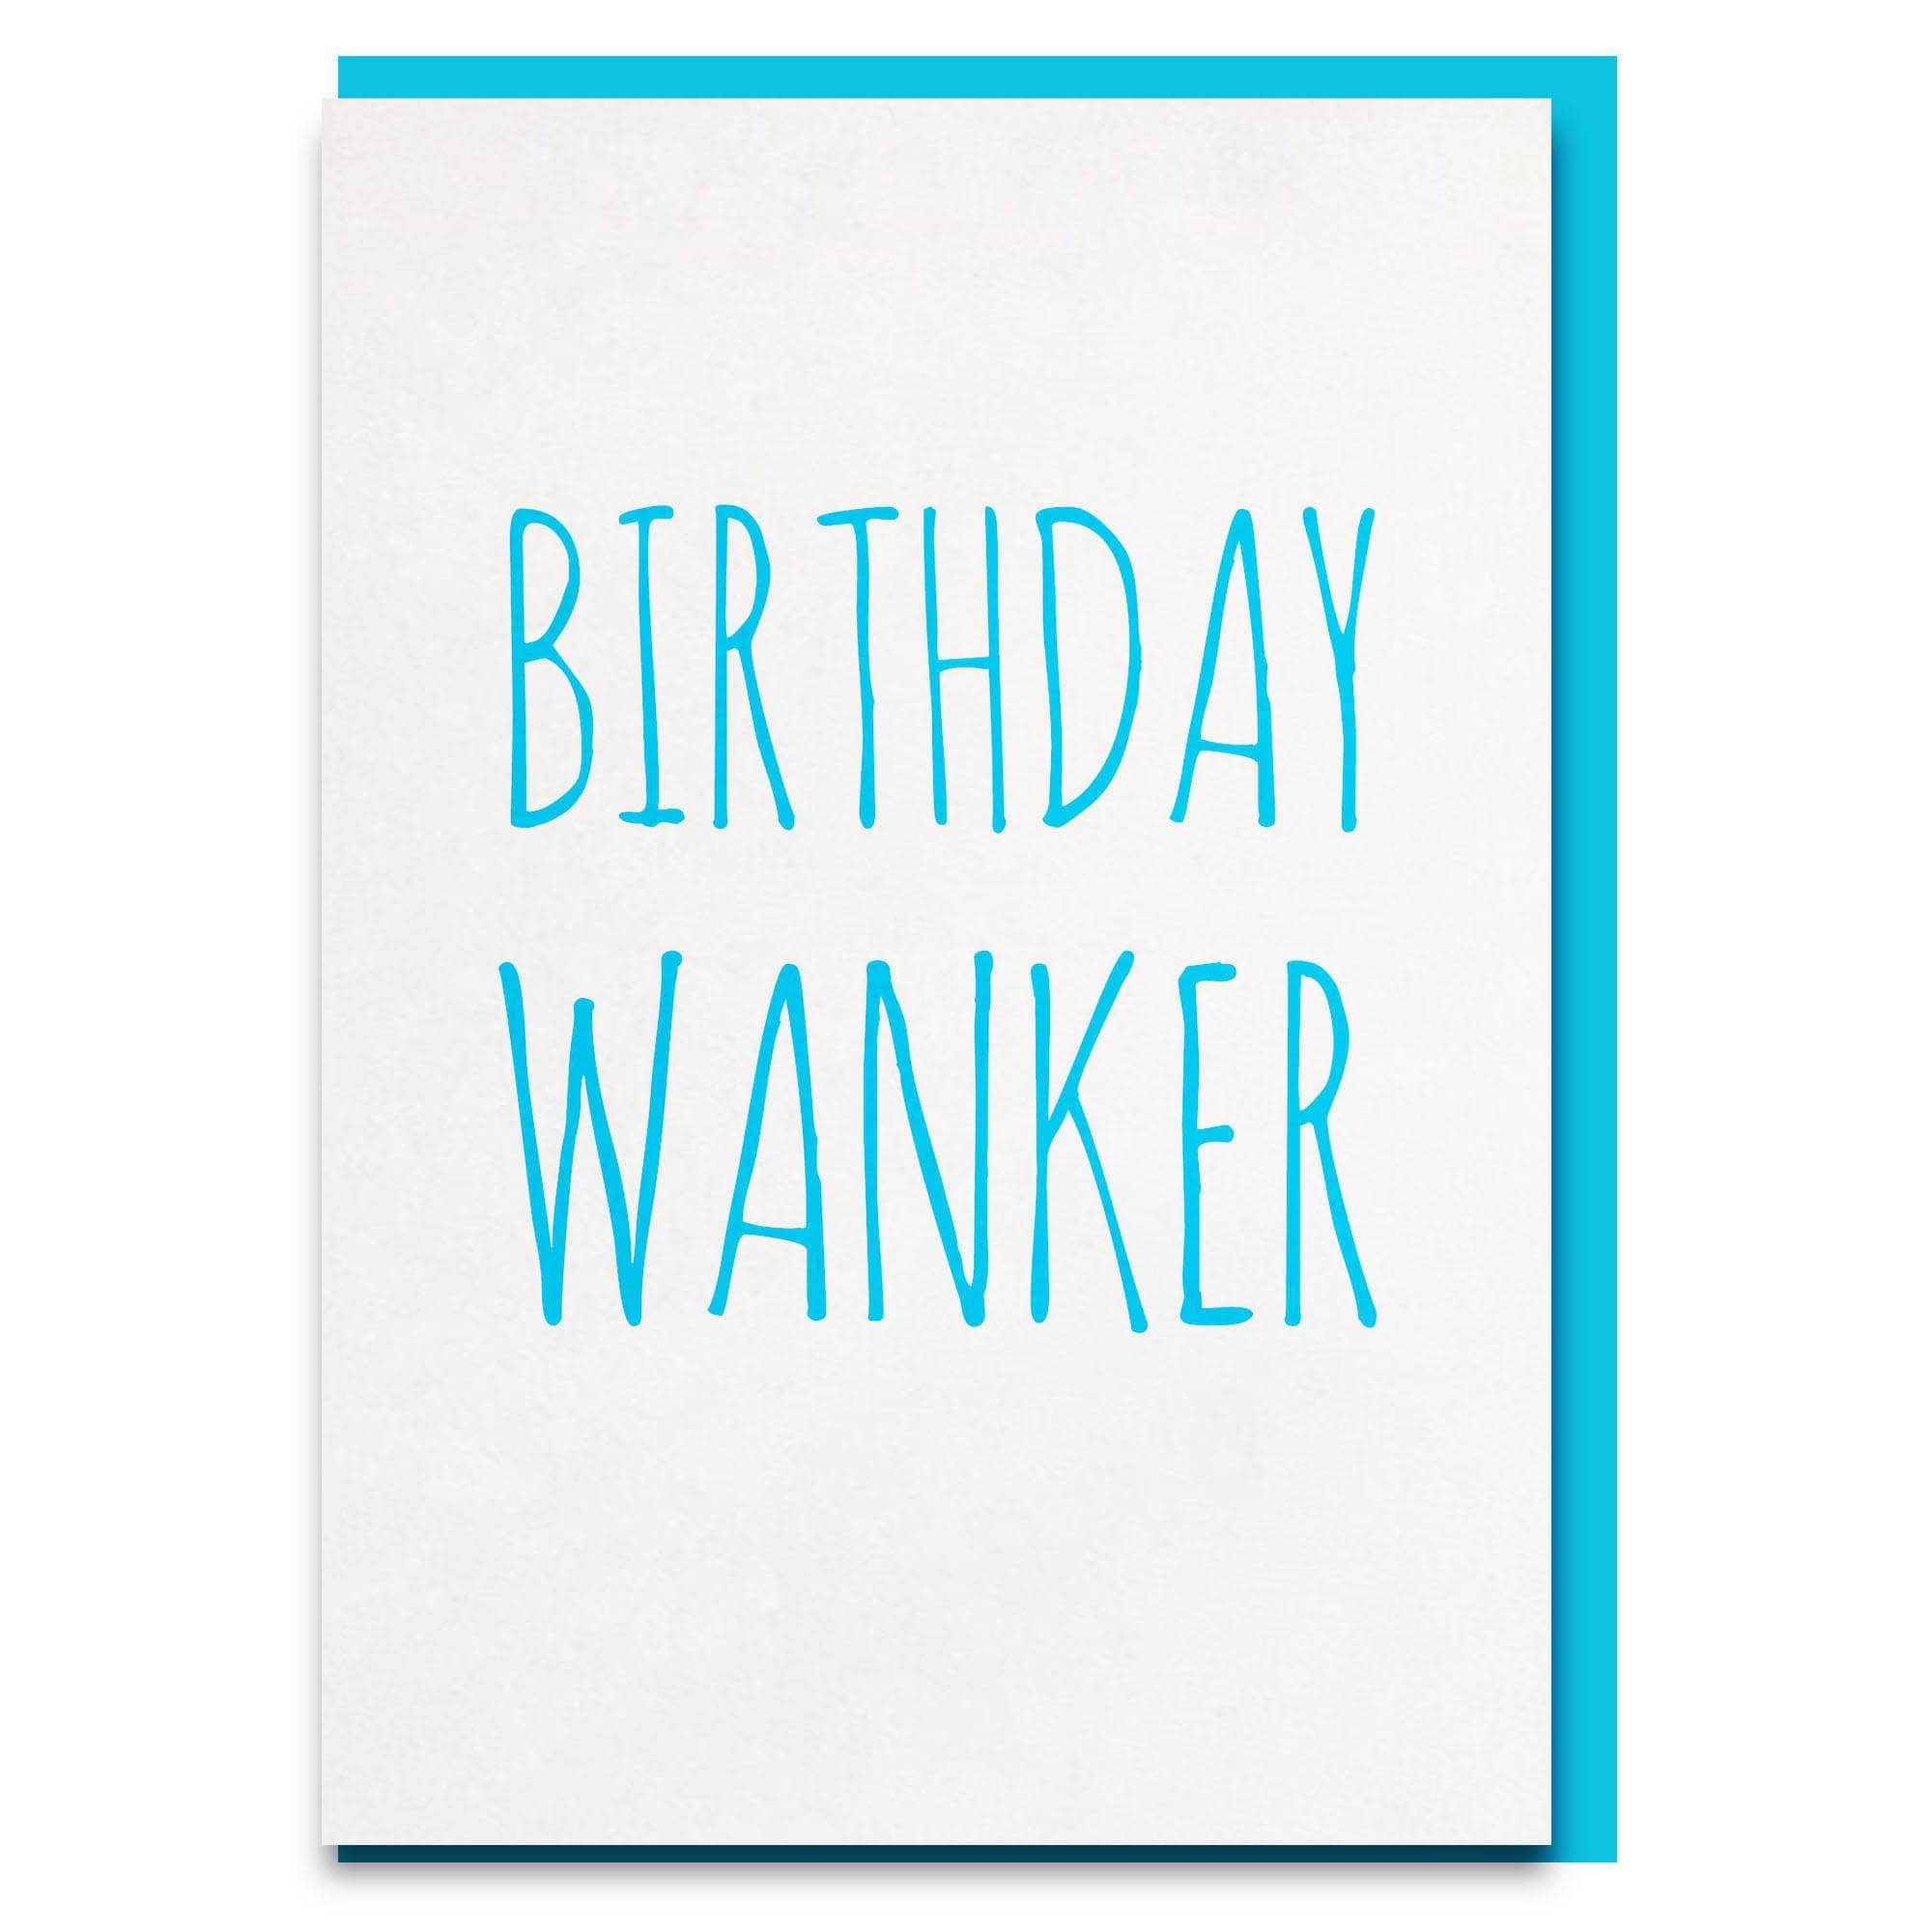 Funny birthday wanker card.